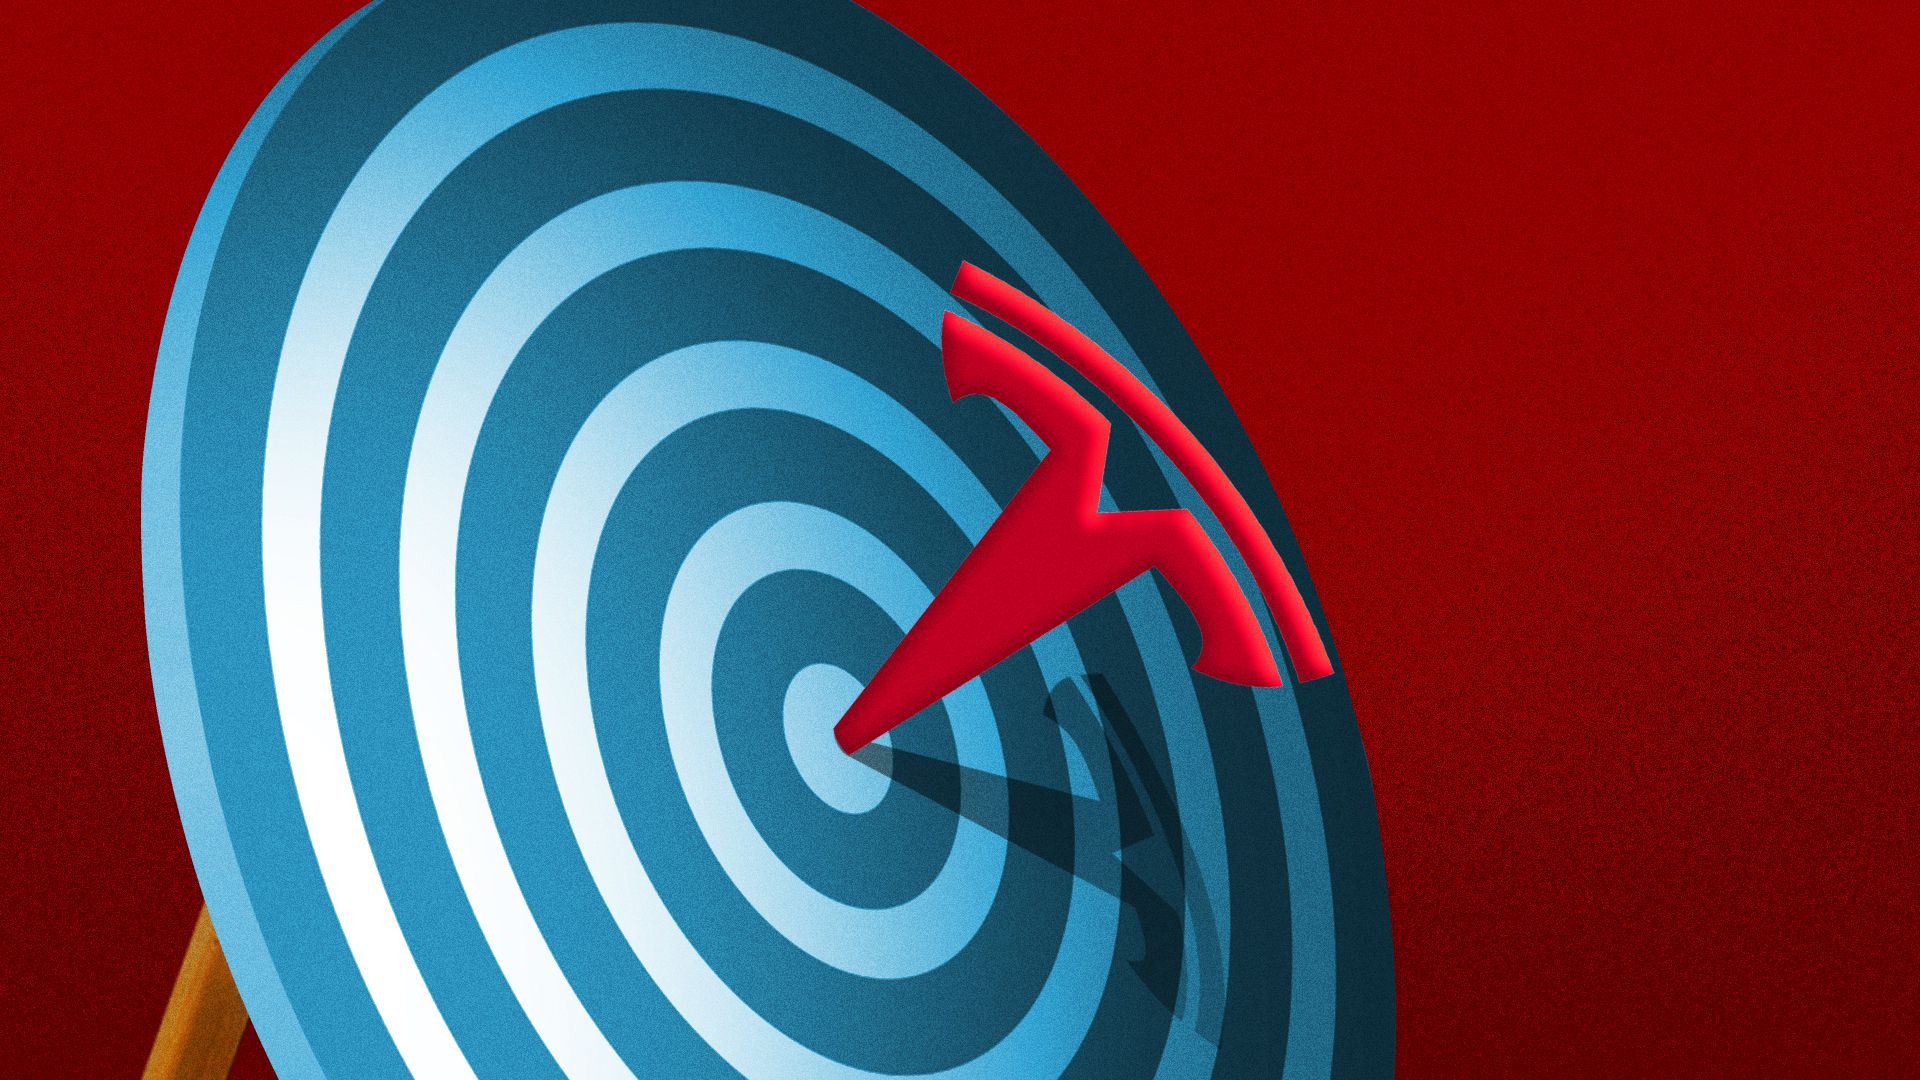 Illustration of the Tesla logo in the center of a target bullseye.